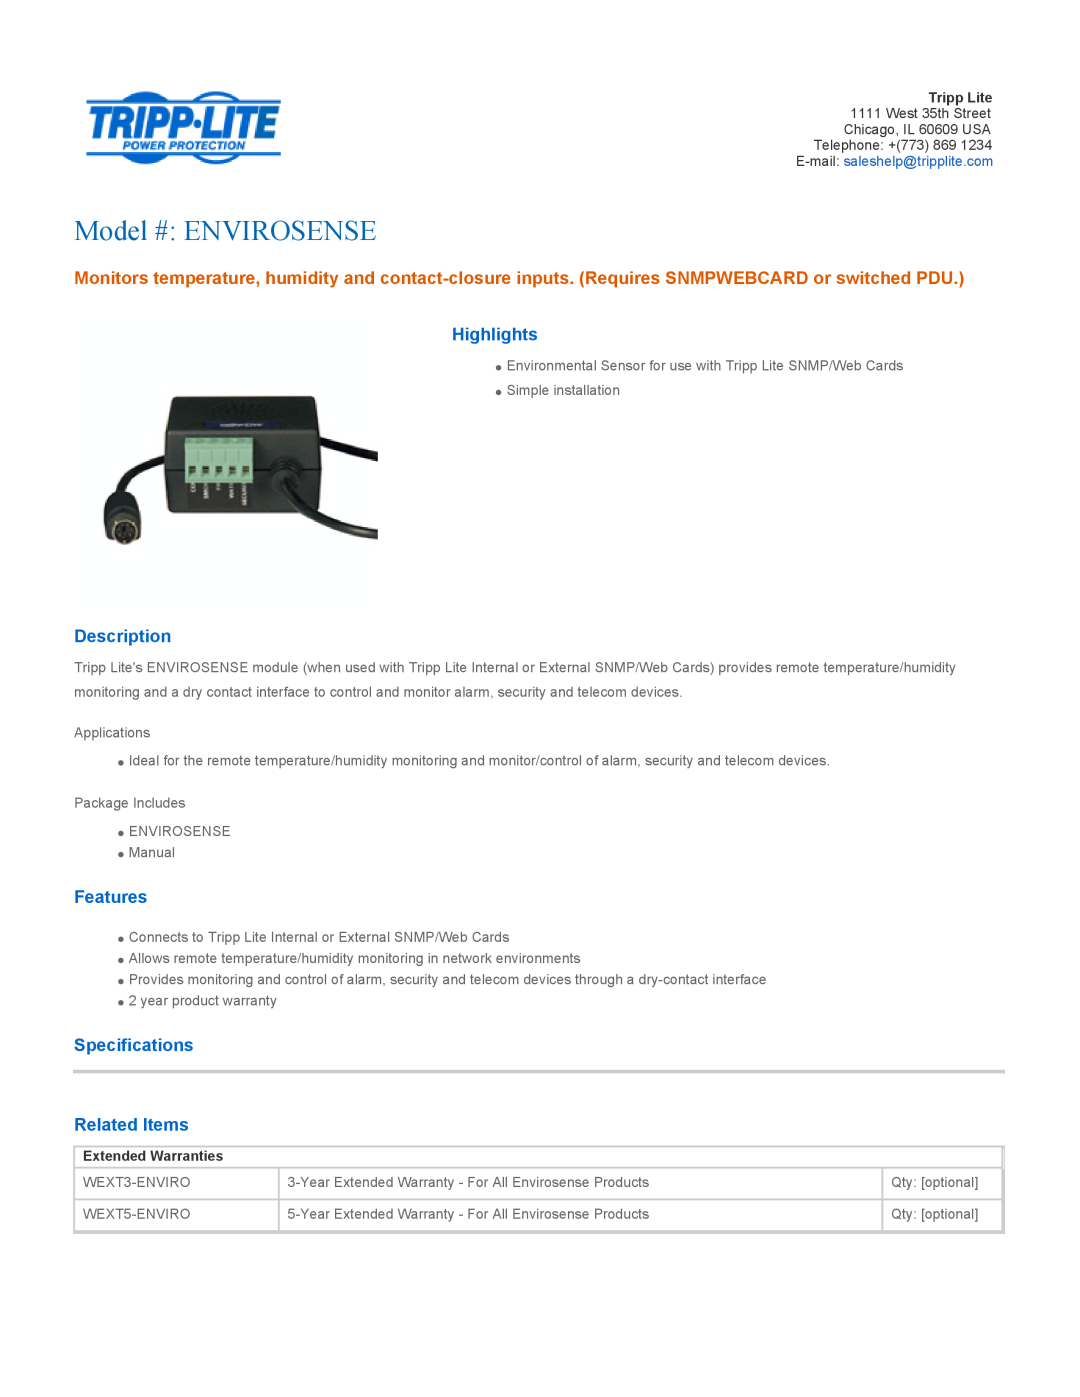 Tripp Lite warranty Model # ENVIROSENSE, Highlights, Description, Features, Specifications, Related Items 